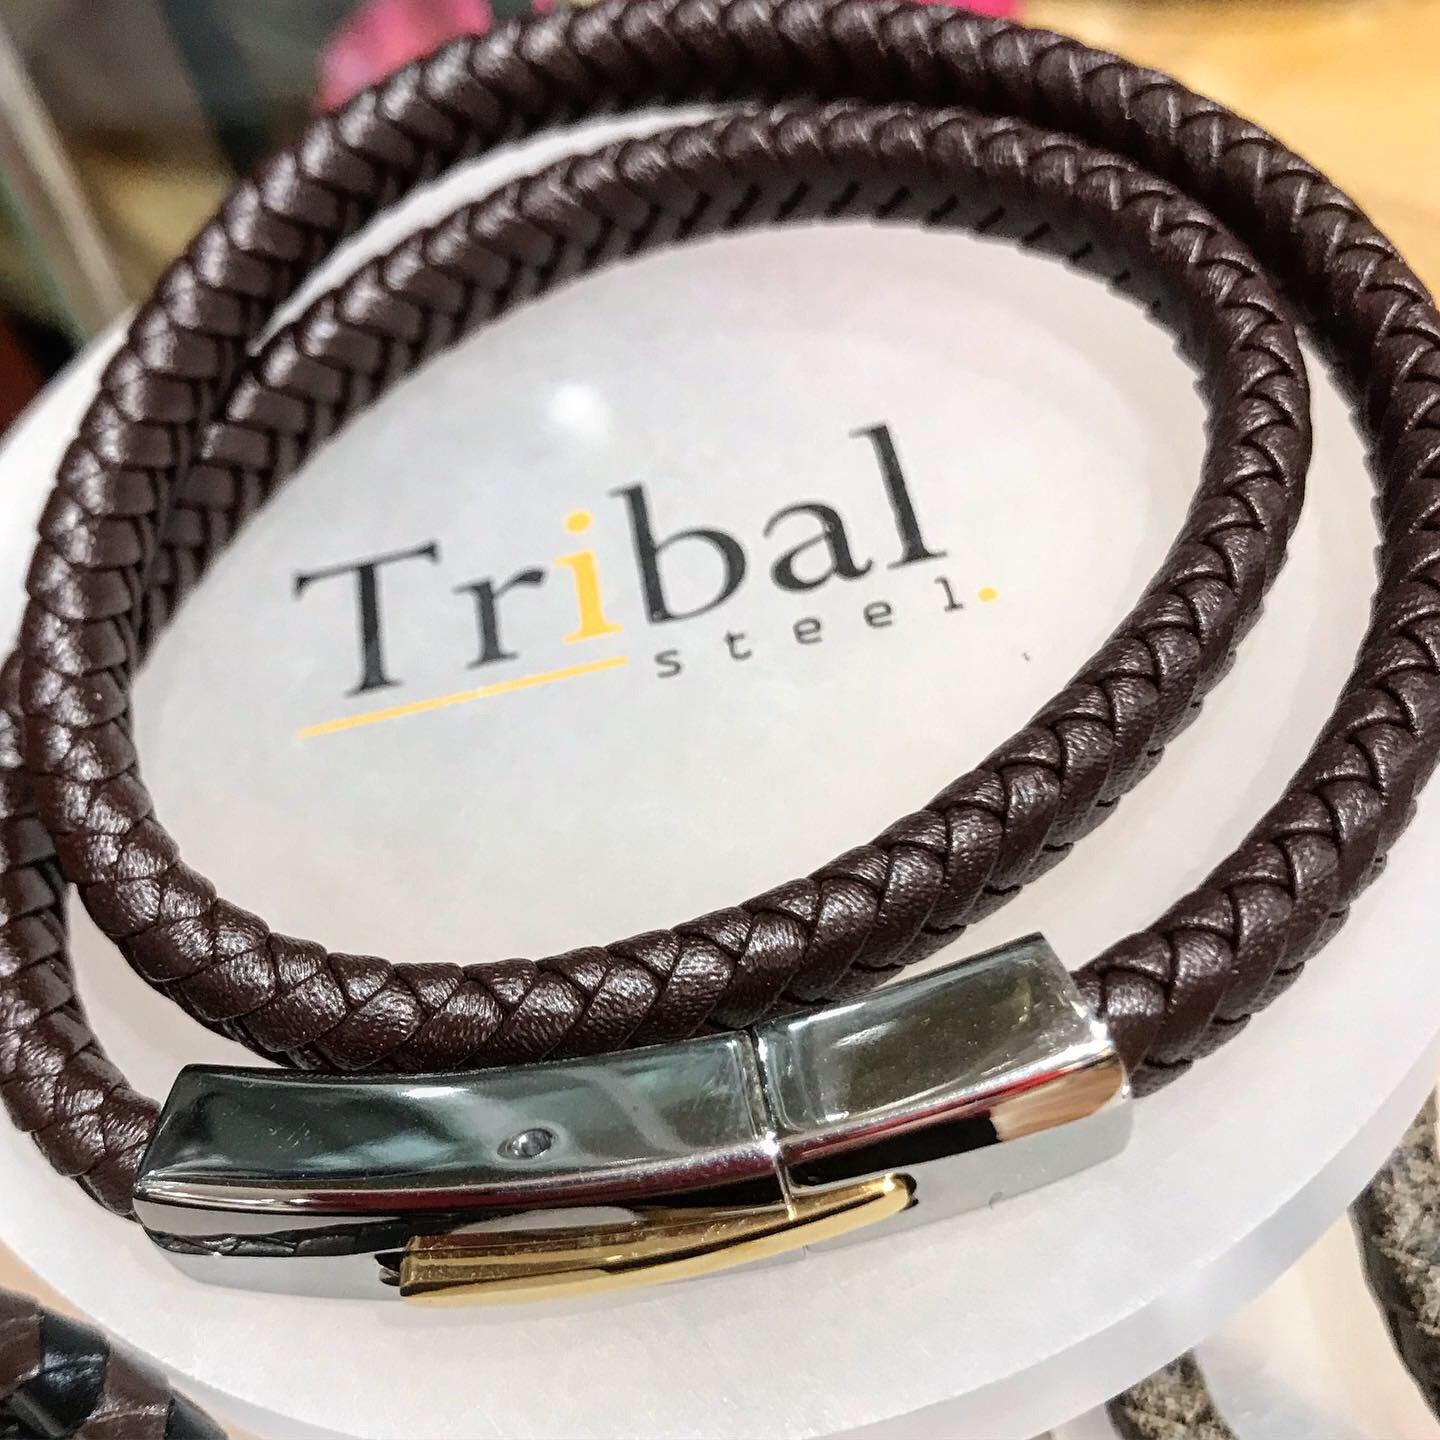 Twist leather bracelet